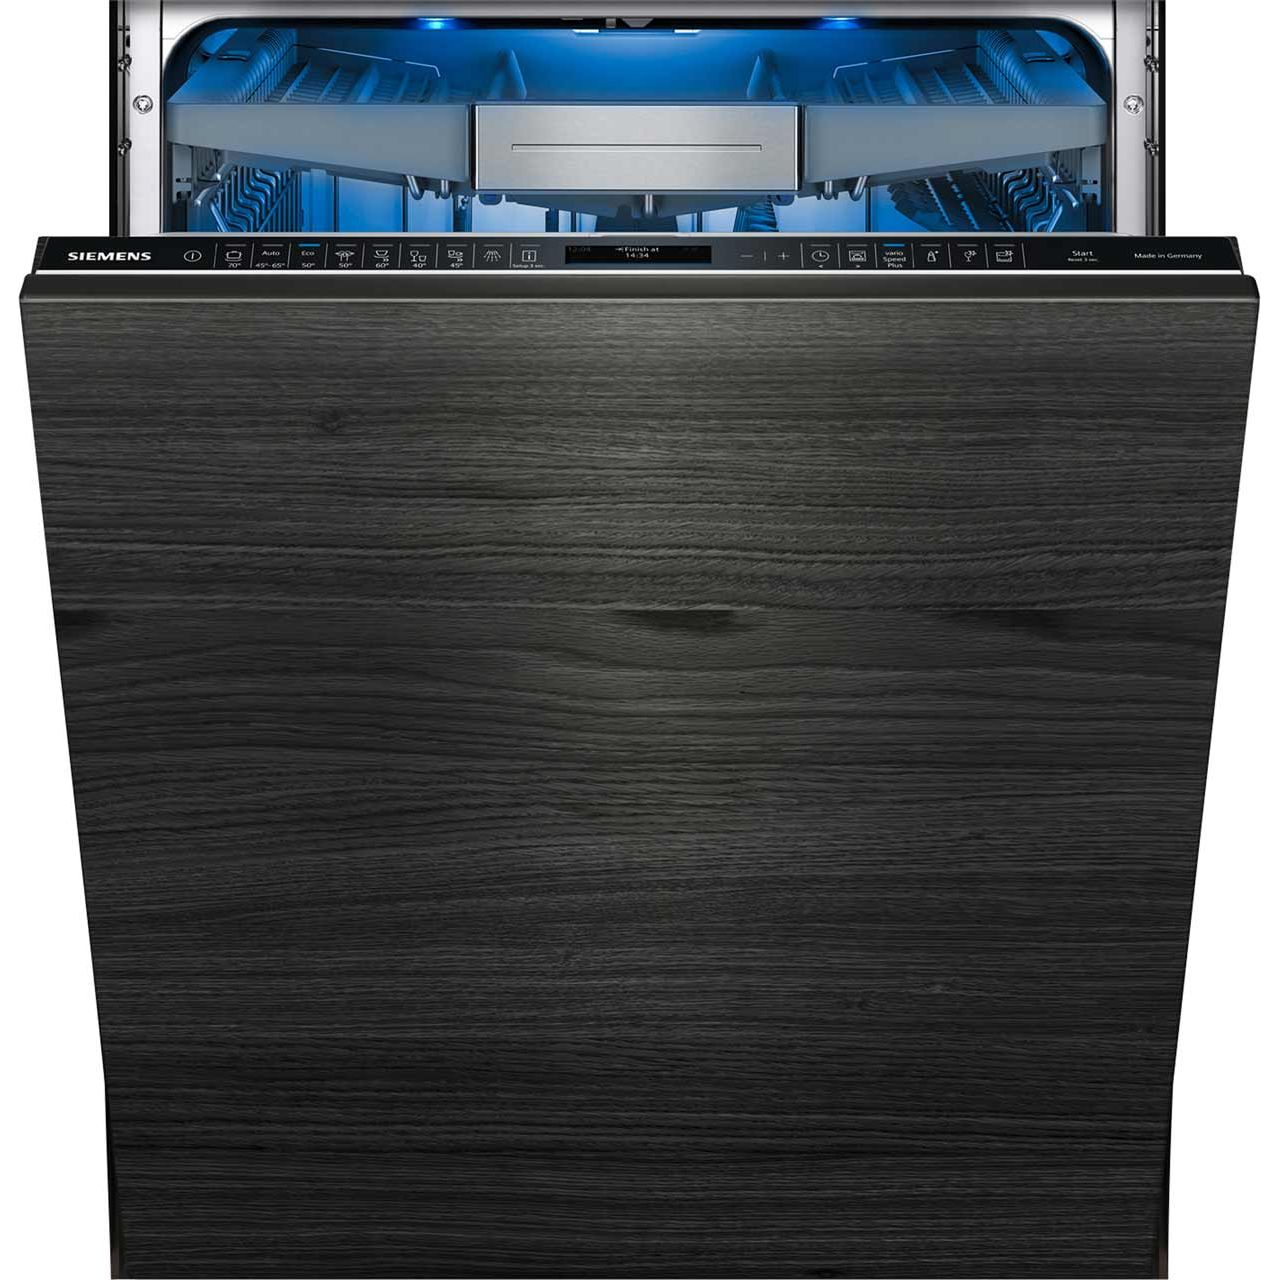 Siemens dishwasher | Integrated | ao.com